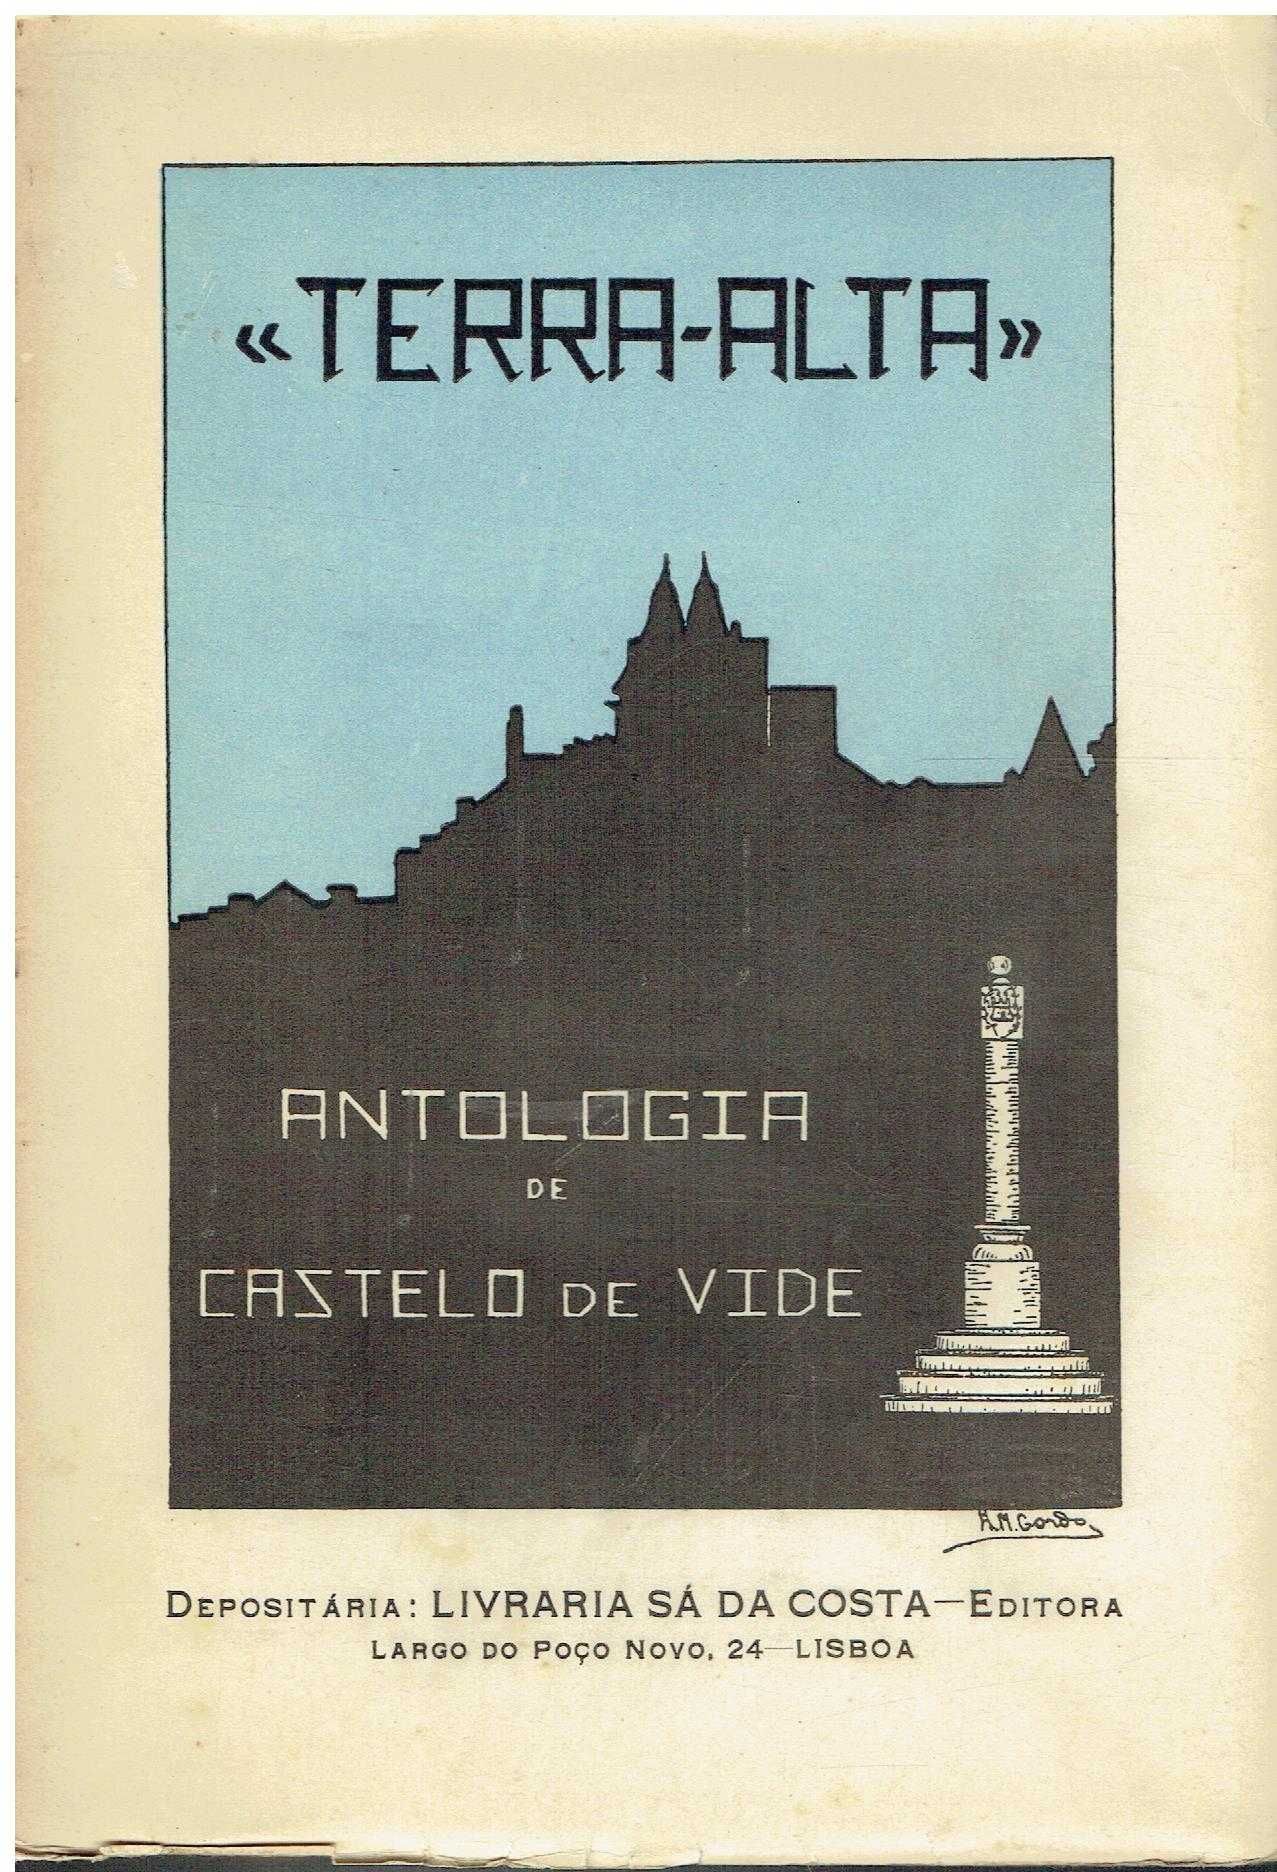 13994

Terra-alta : antologia de Castelo de Vide 
de Joaquim Leitäo